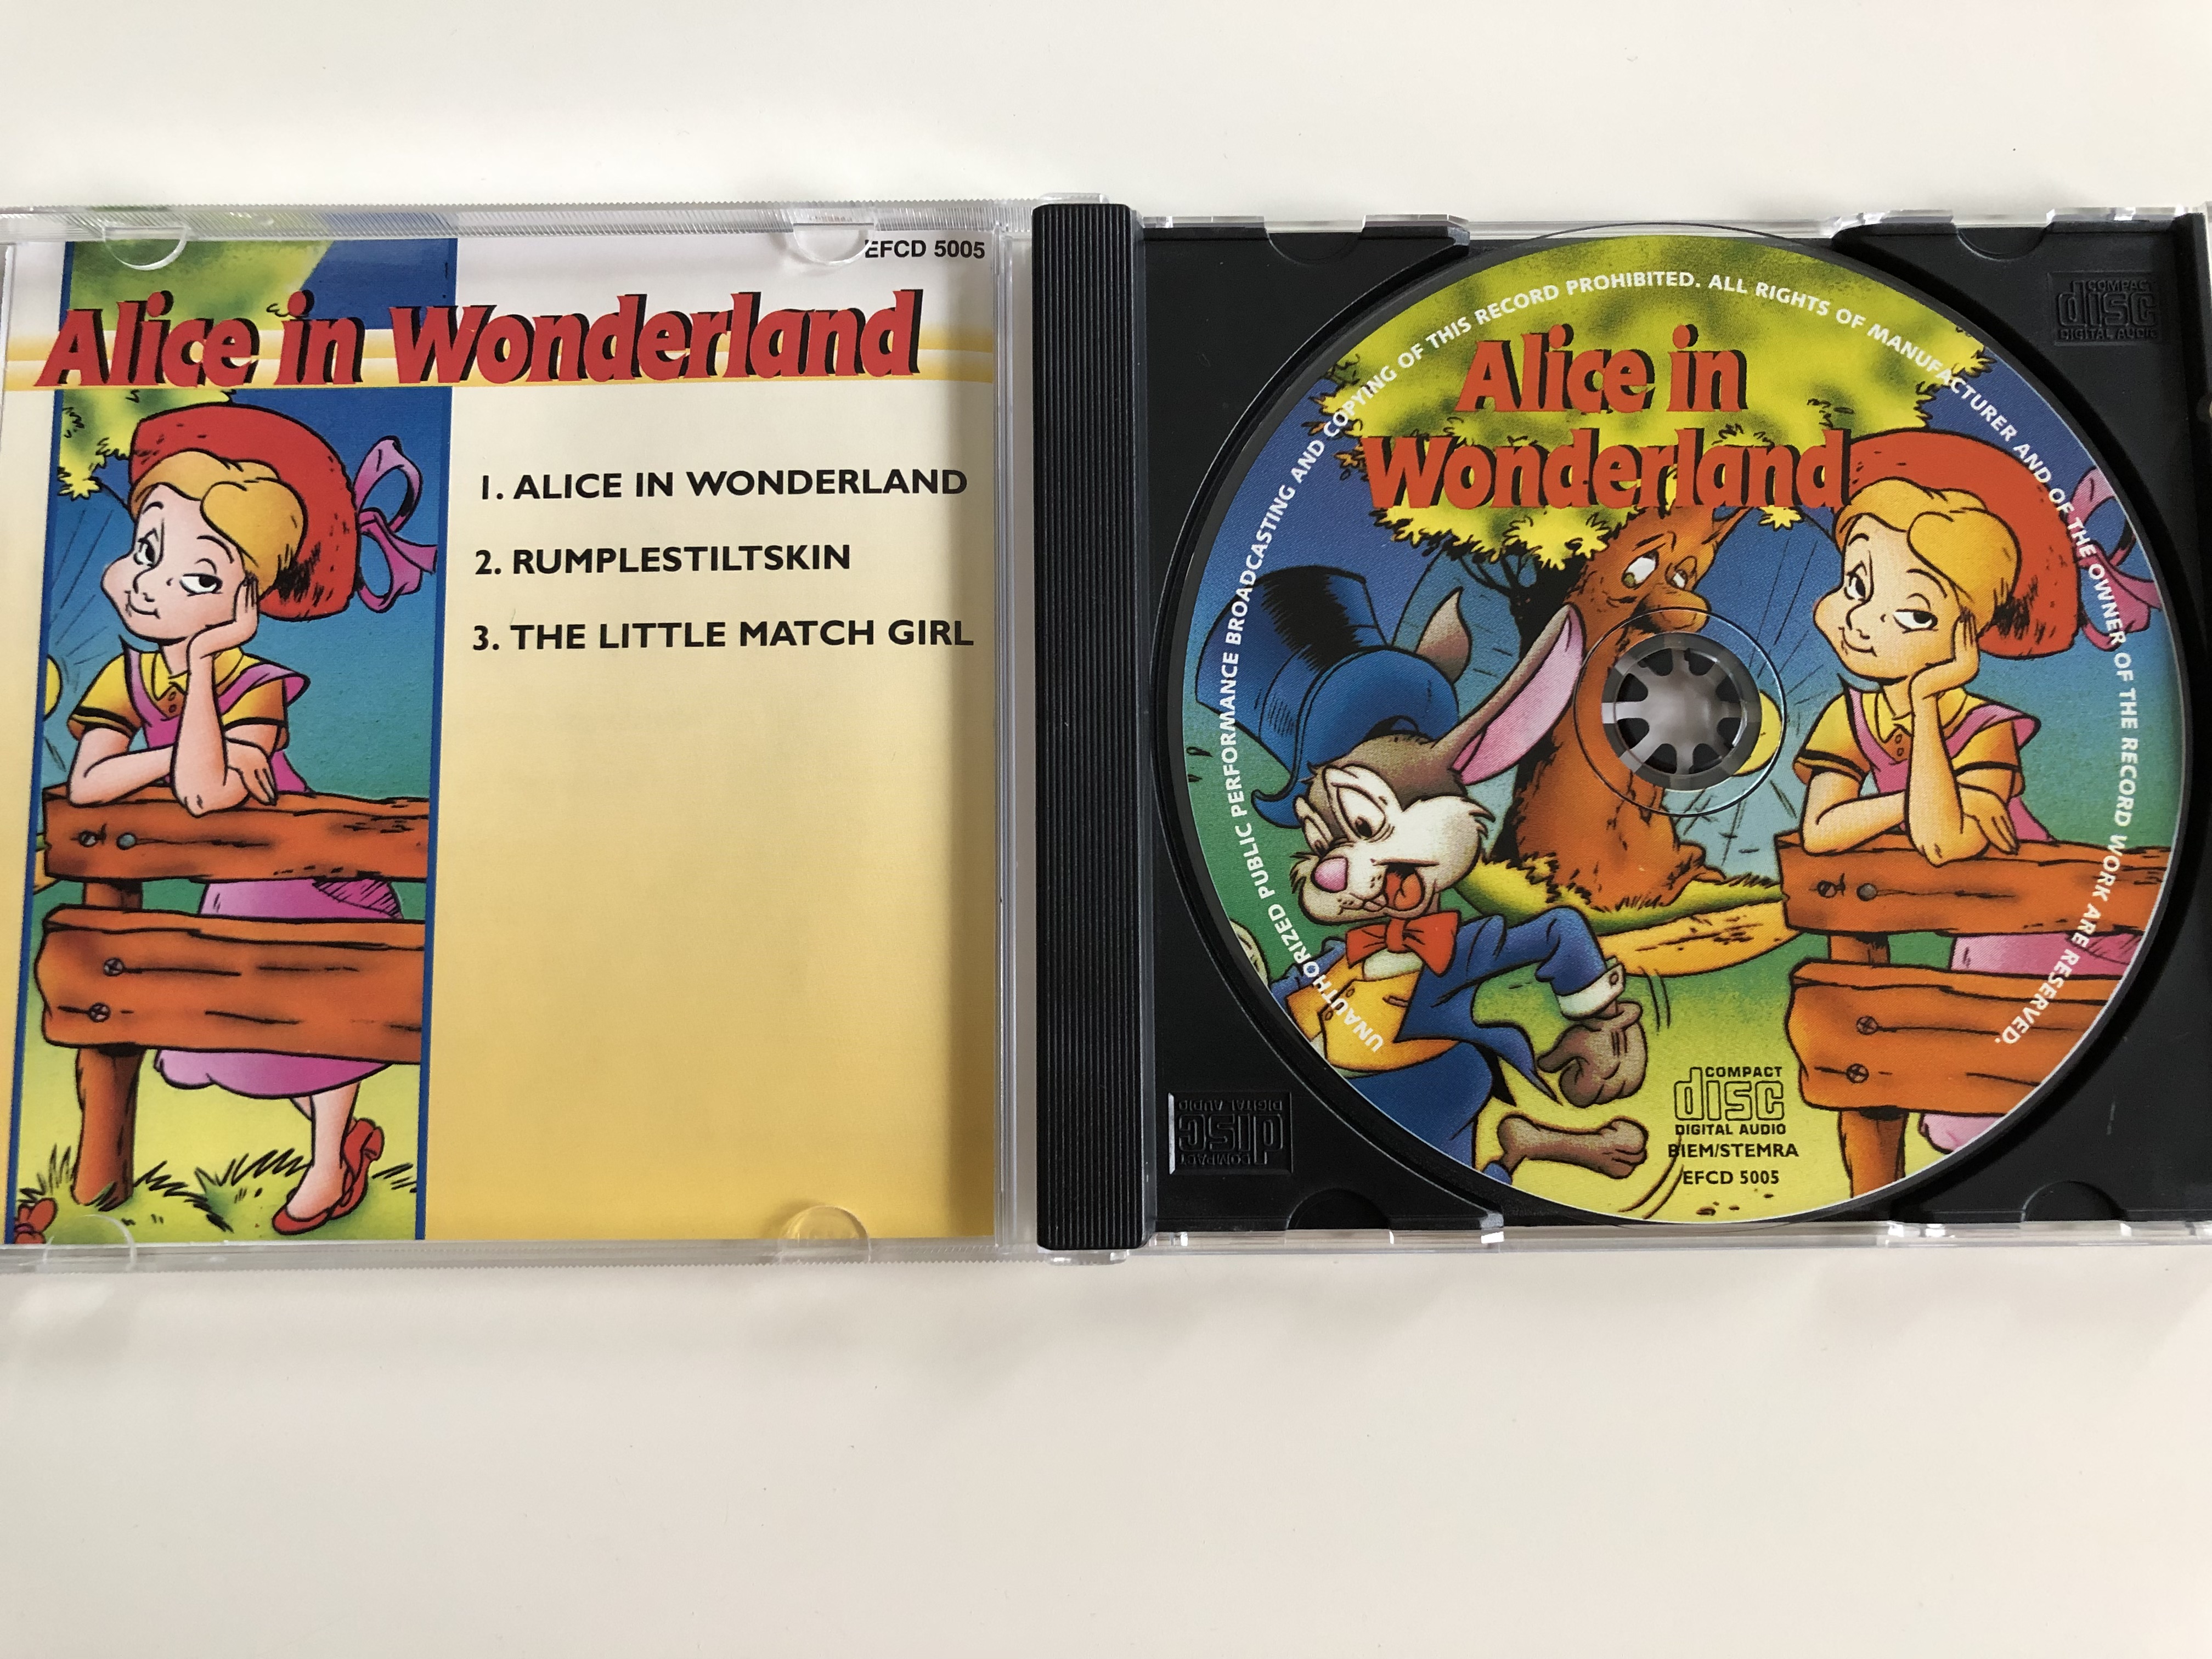 alice-in-wonderland-classic-fairytales-audio-book-1996-read-bz-paul-bentall-katy-riding-efcd5005-disky-2-.jpg